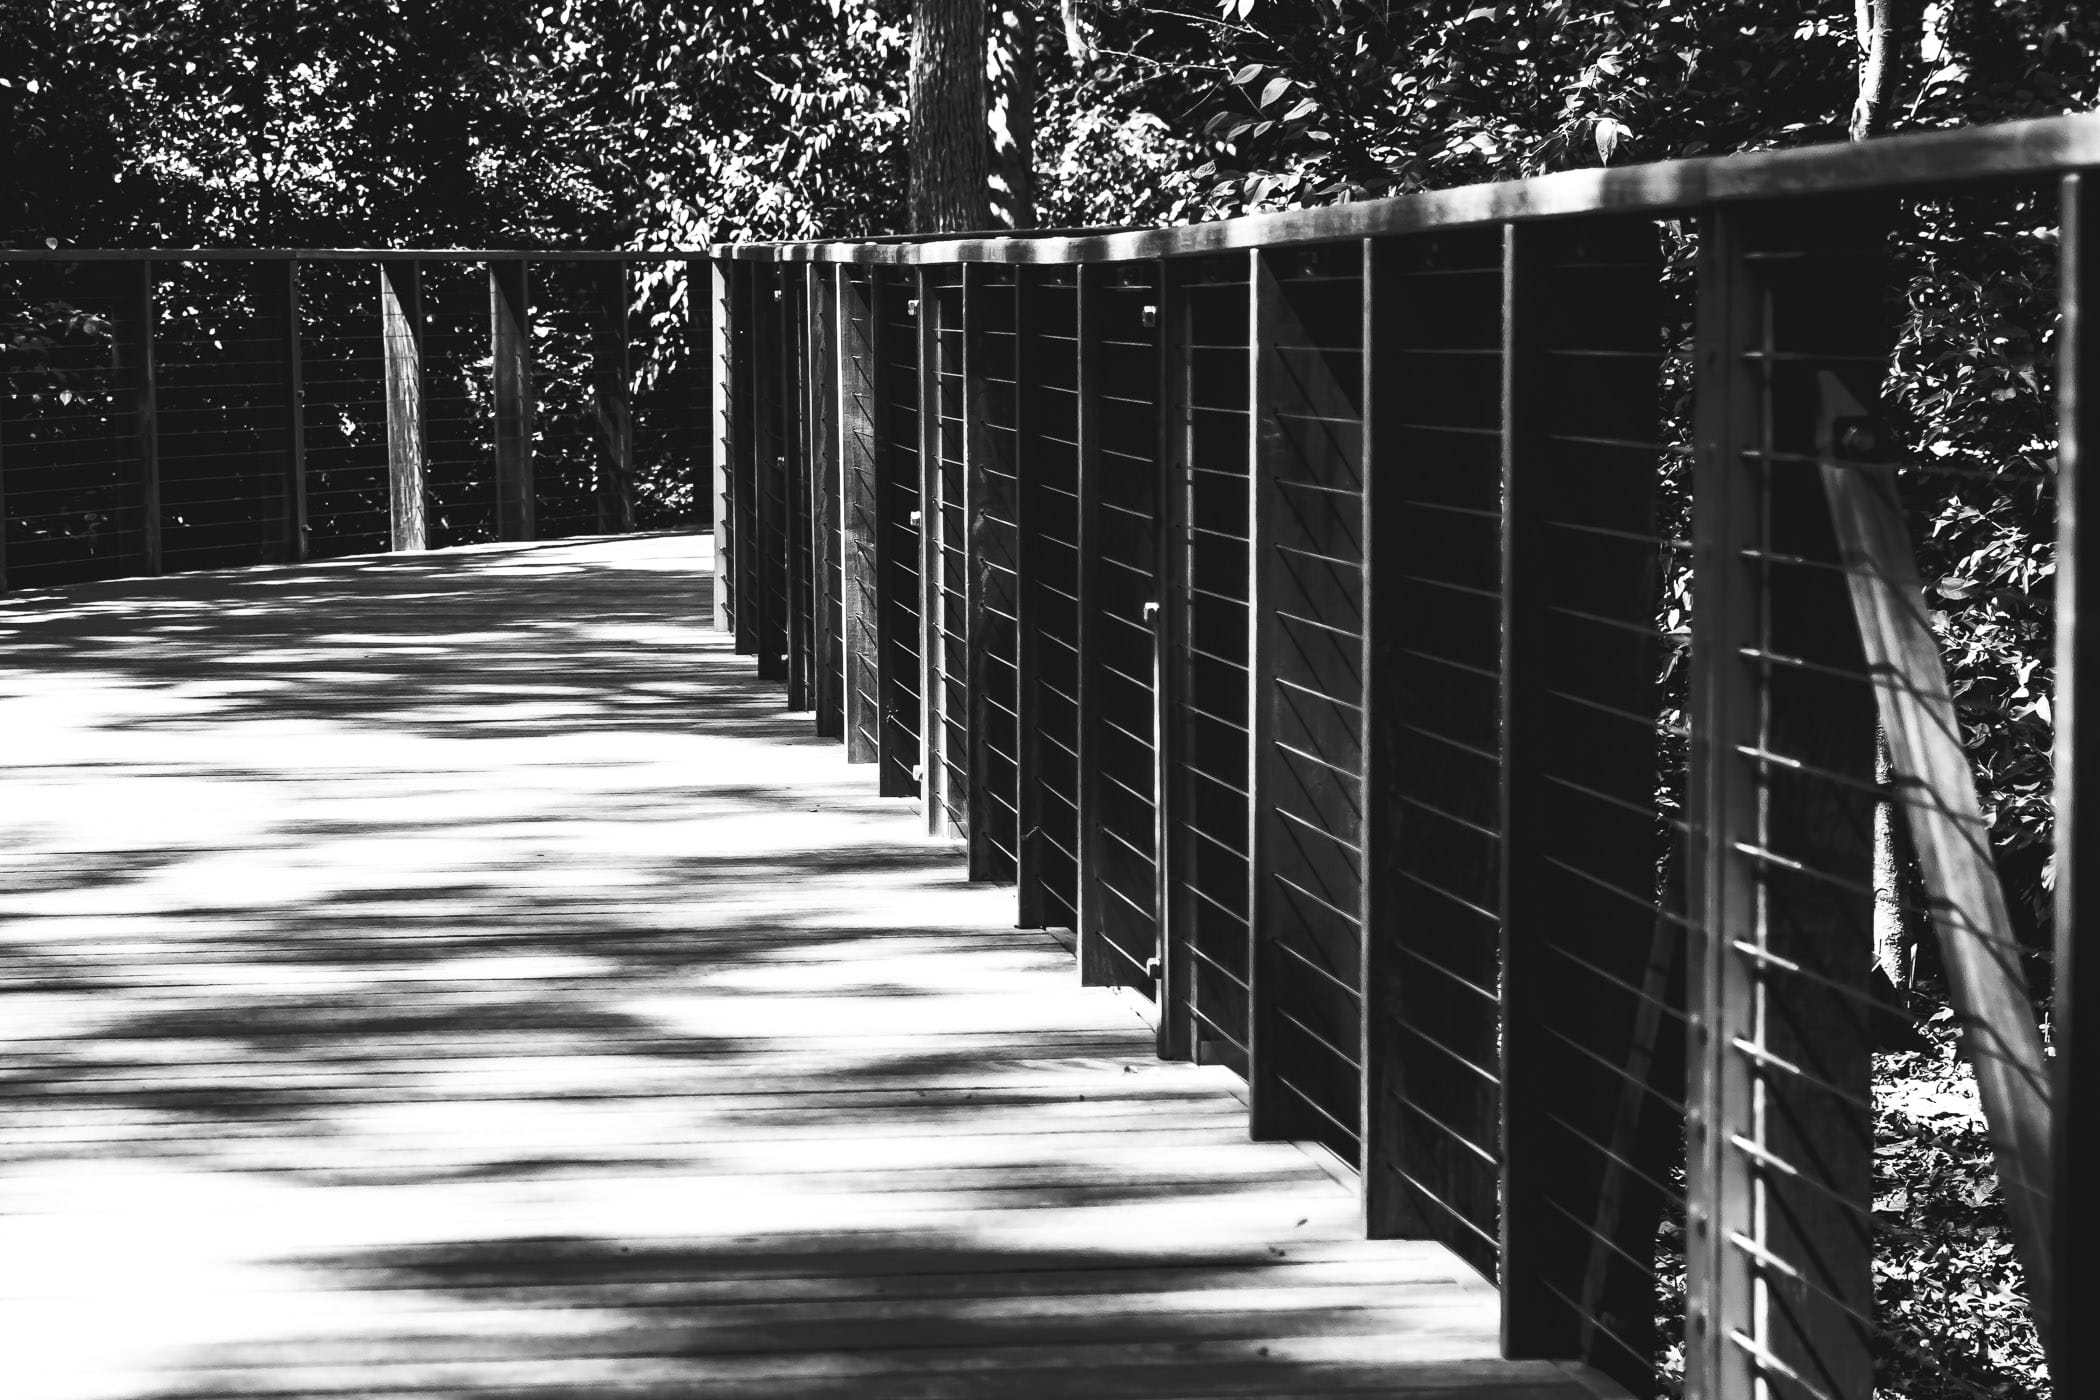 A pedestrian bridge winds through the trees at the Fort Worth Botanic Garden.